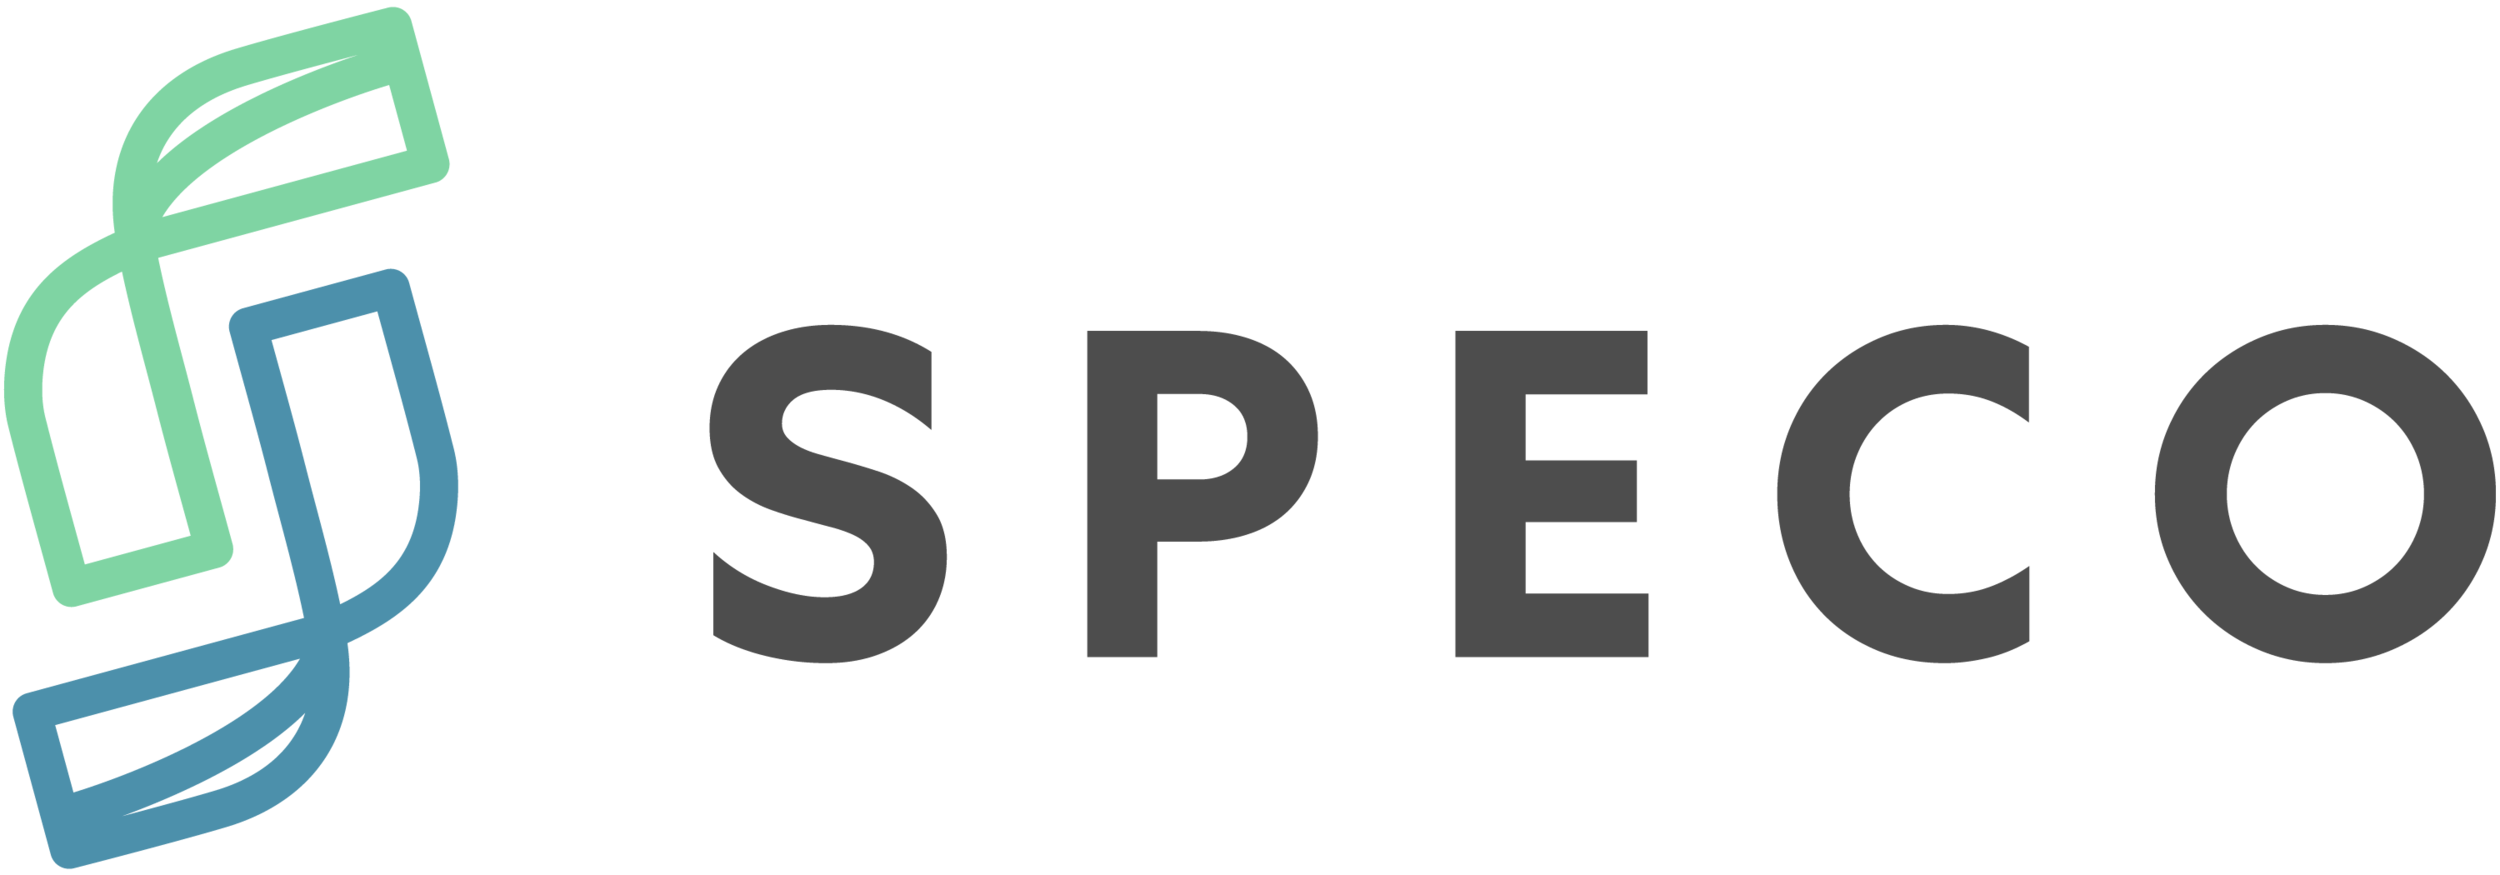 Speco Singapore Pte Ltd - Certified B Corporation in Singapore